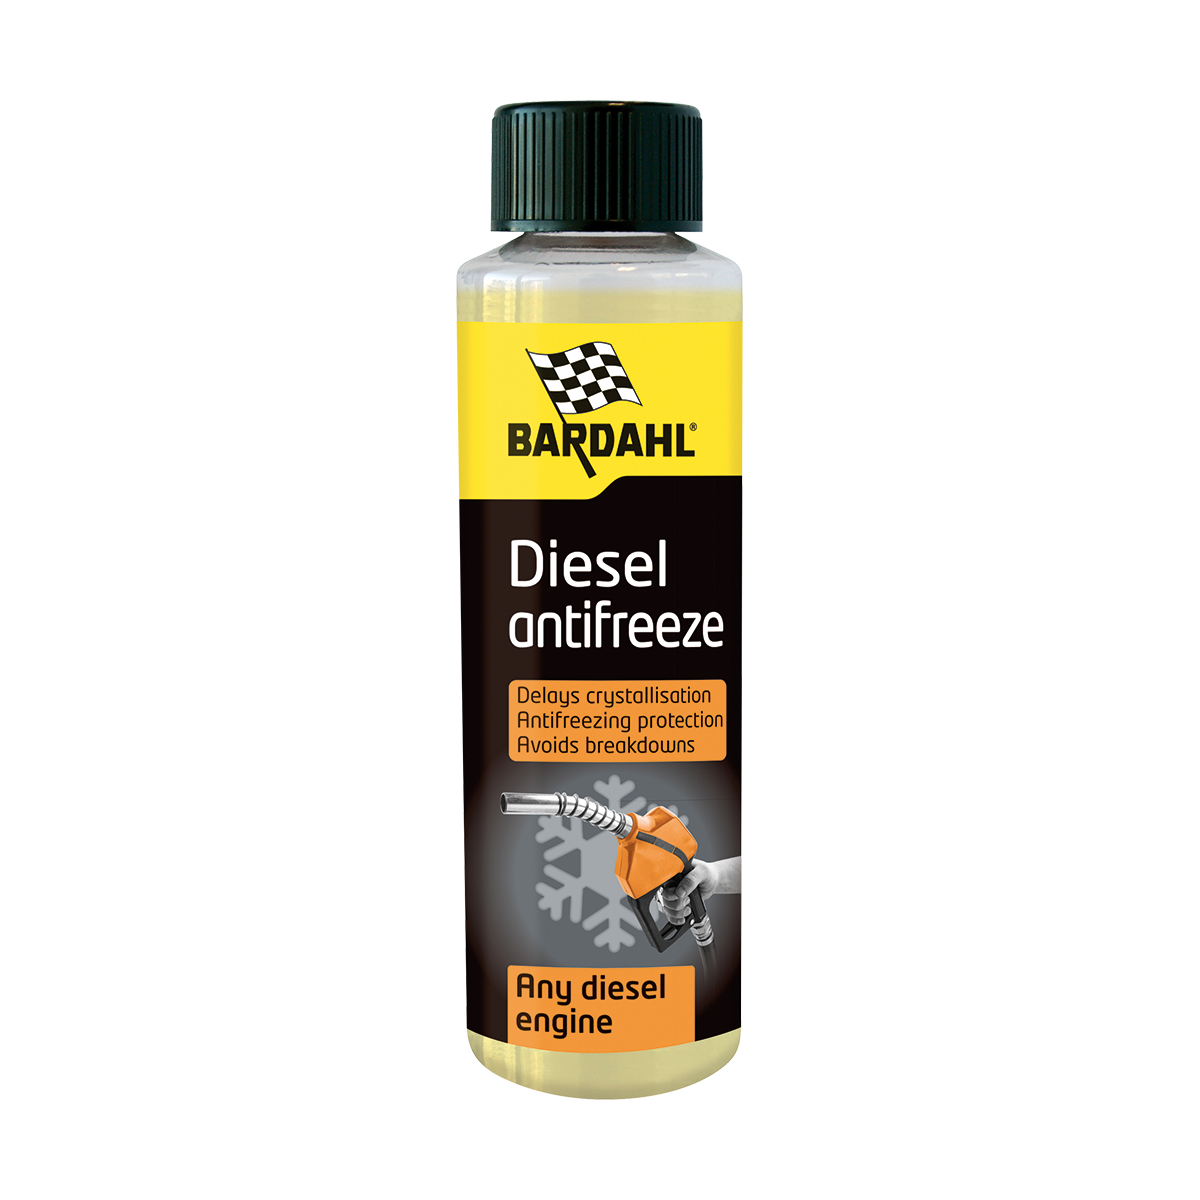 Diesel Antifreeze, Engine lubricant, Engine cleaner